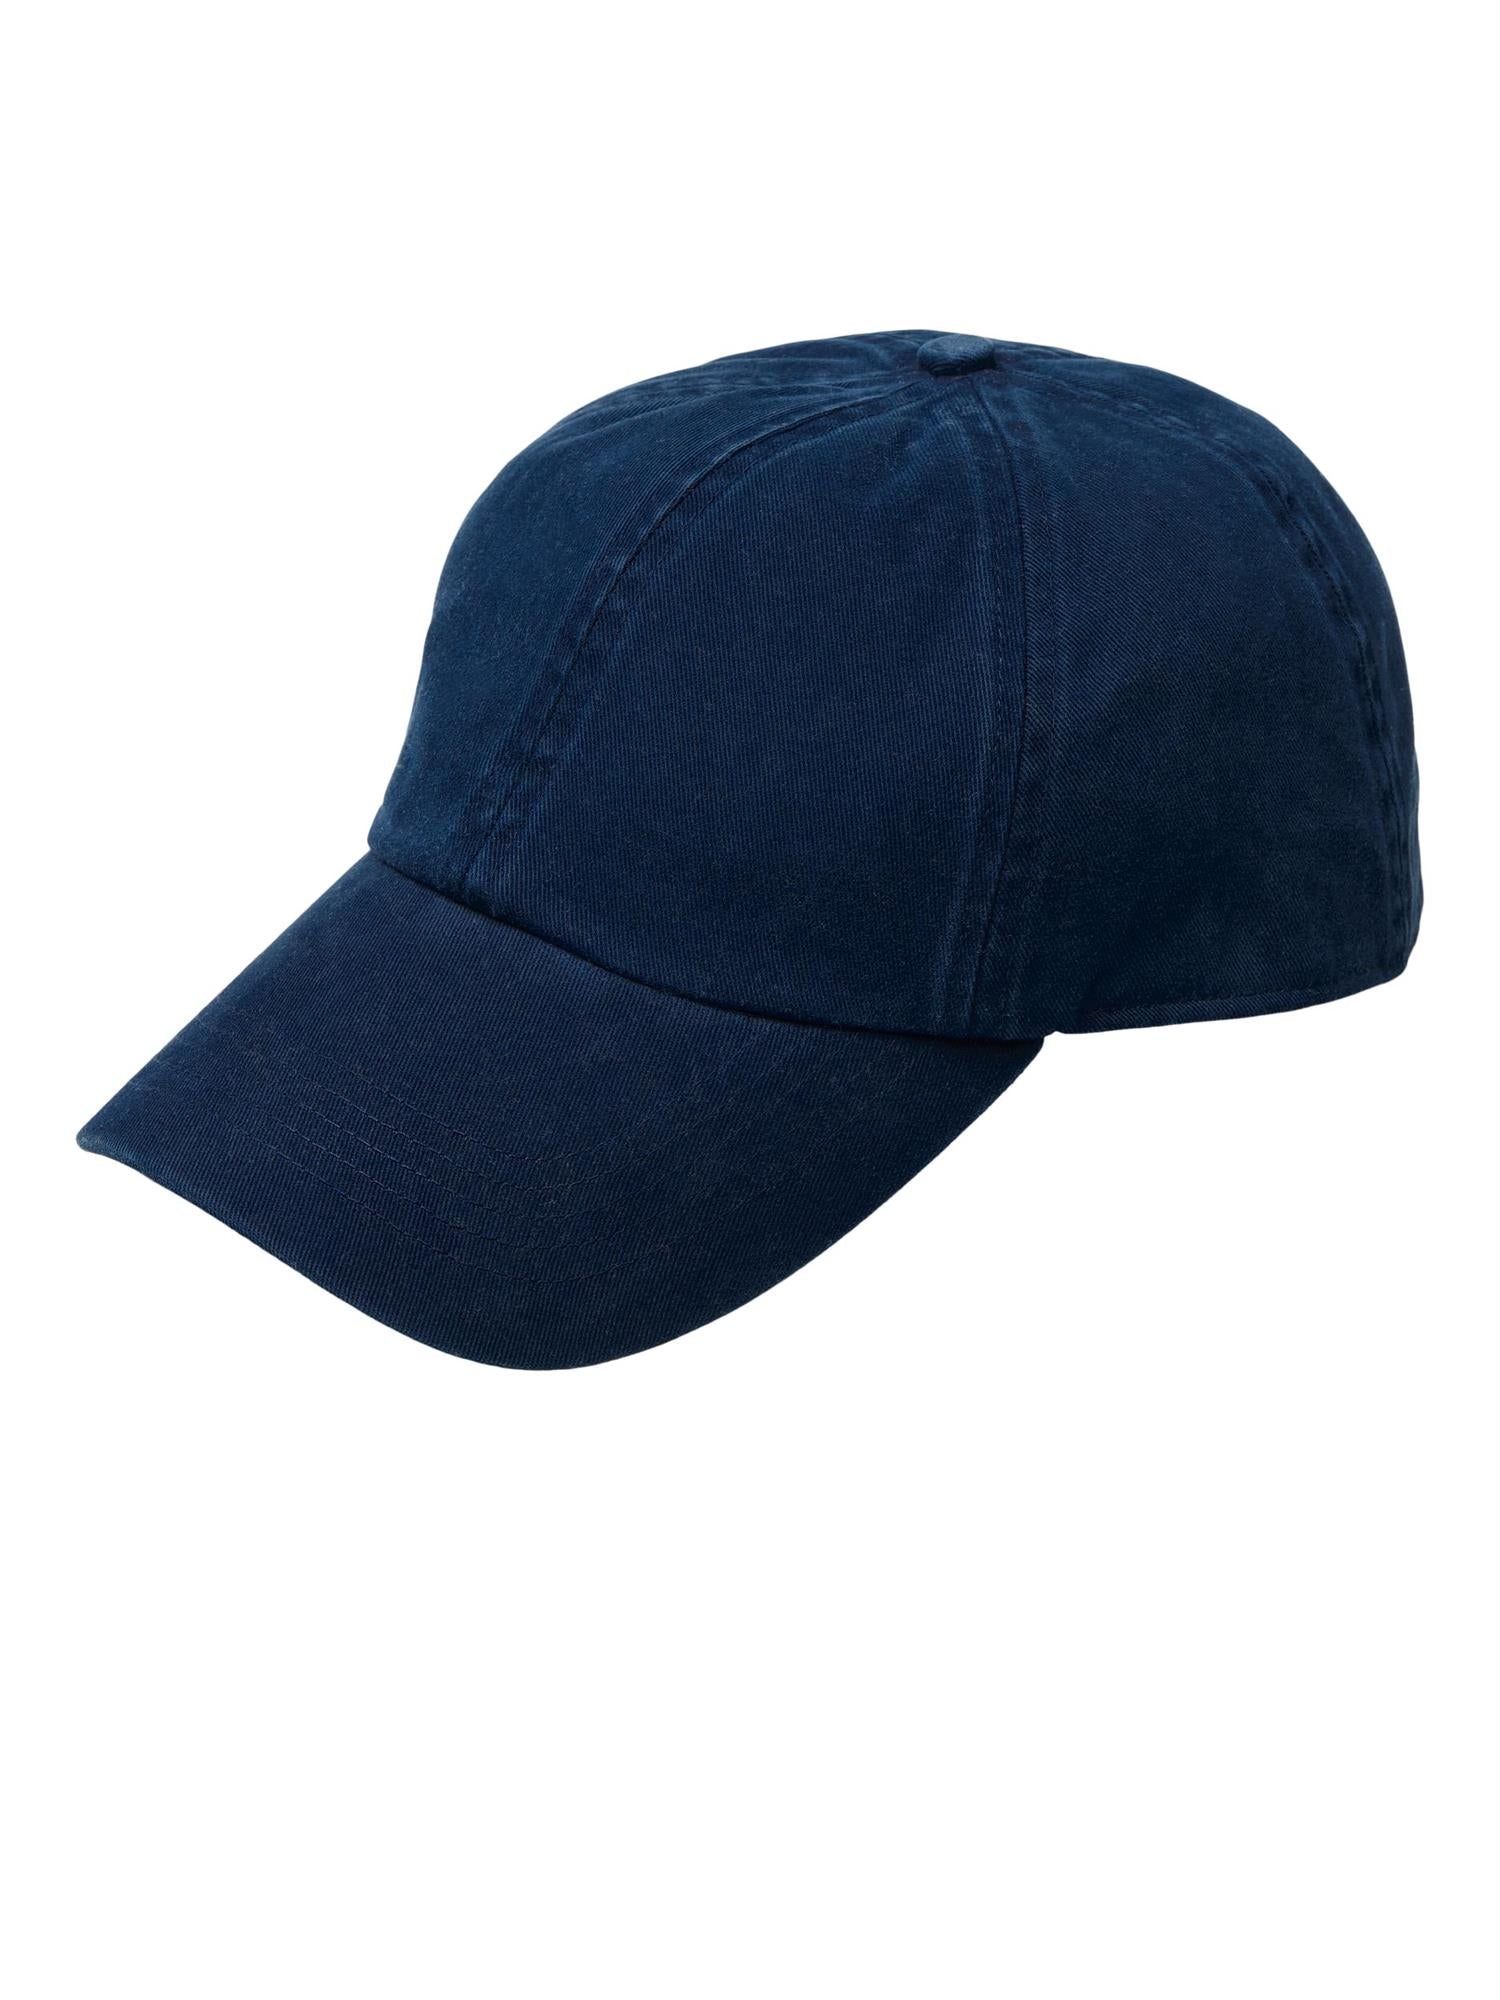 JACBRINK CAP